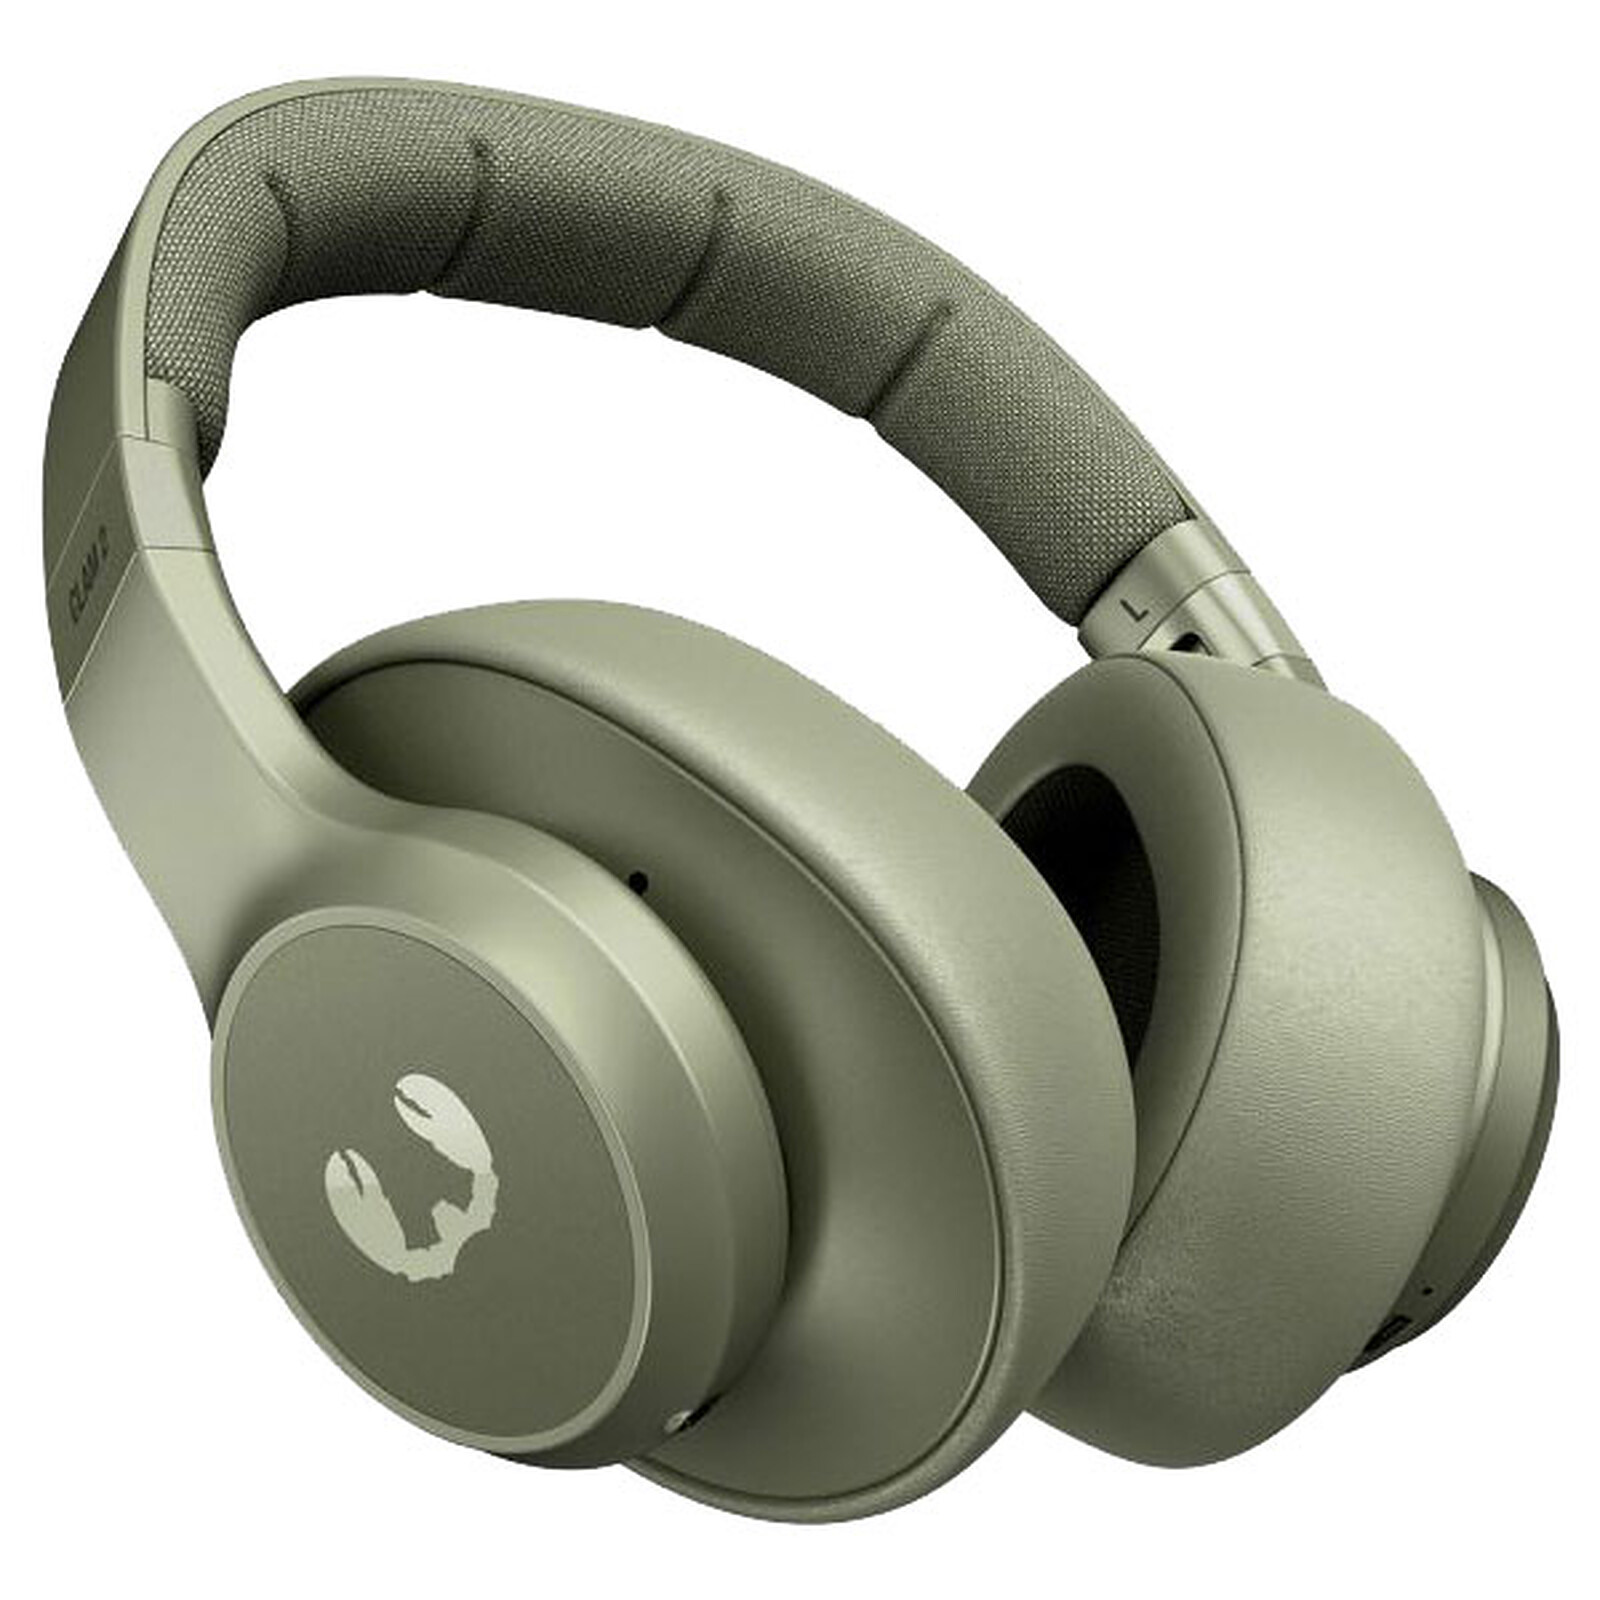 Fresh\'n Rebel Clam 2 Dried Green - Headphones - LDLC 3-year warranty